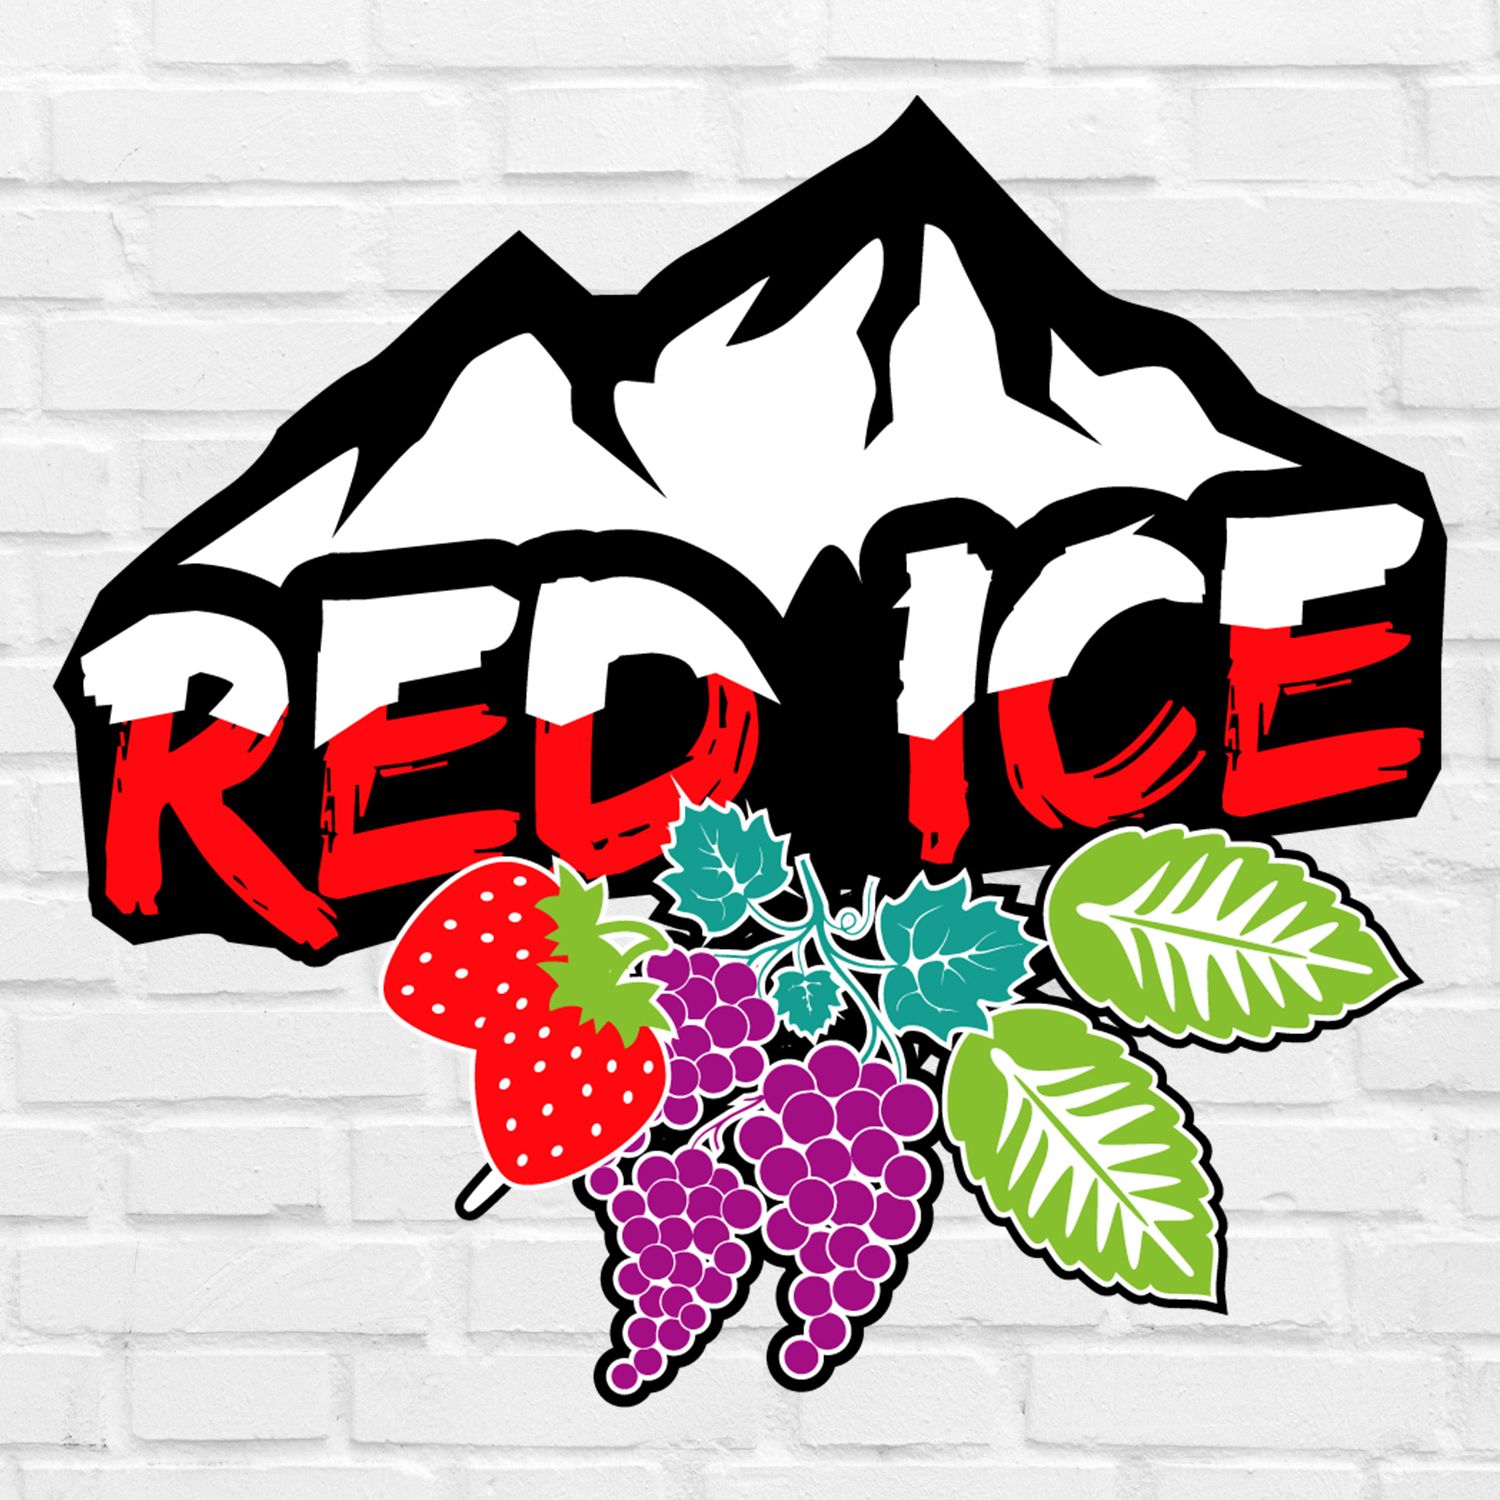 Red Ice 10ml - E-Intense